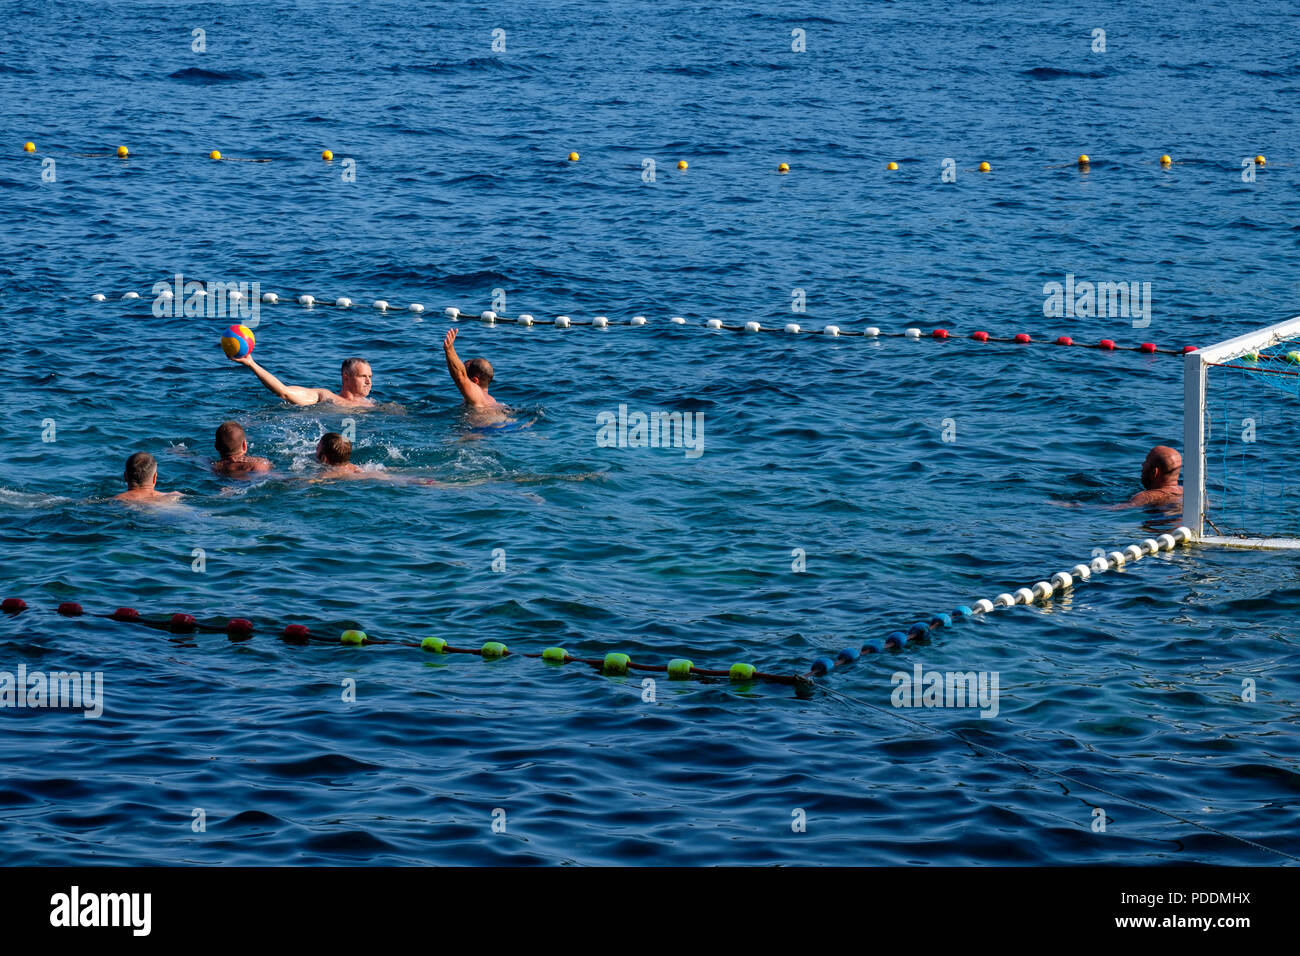 People playing water polo in the Adriatic Sea, Dubrovnik, Croatia, Europe Stock Photo